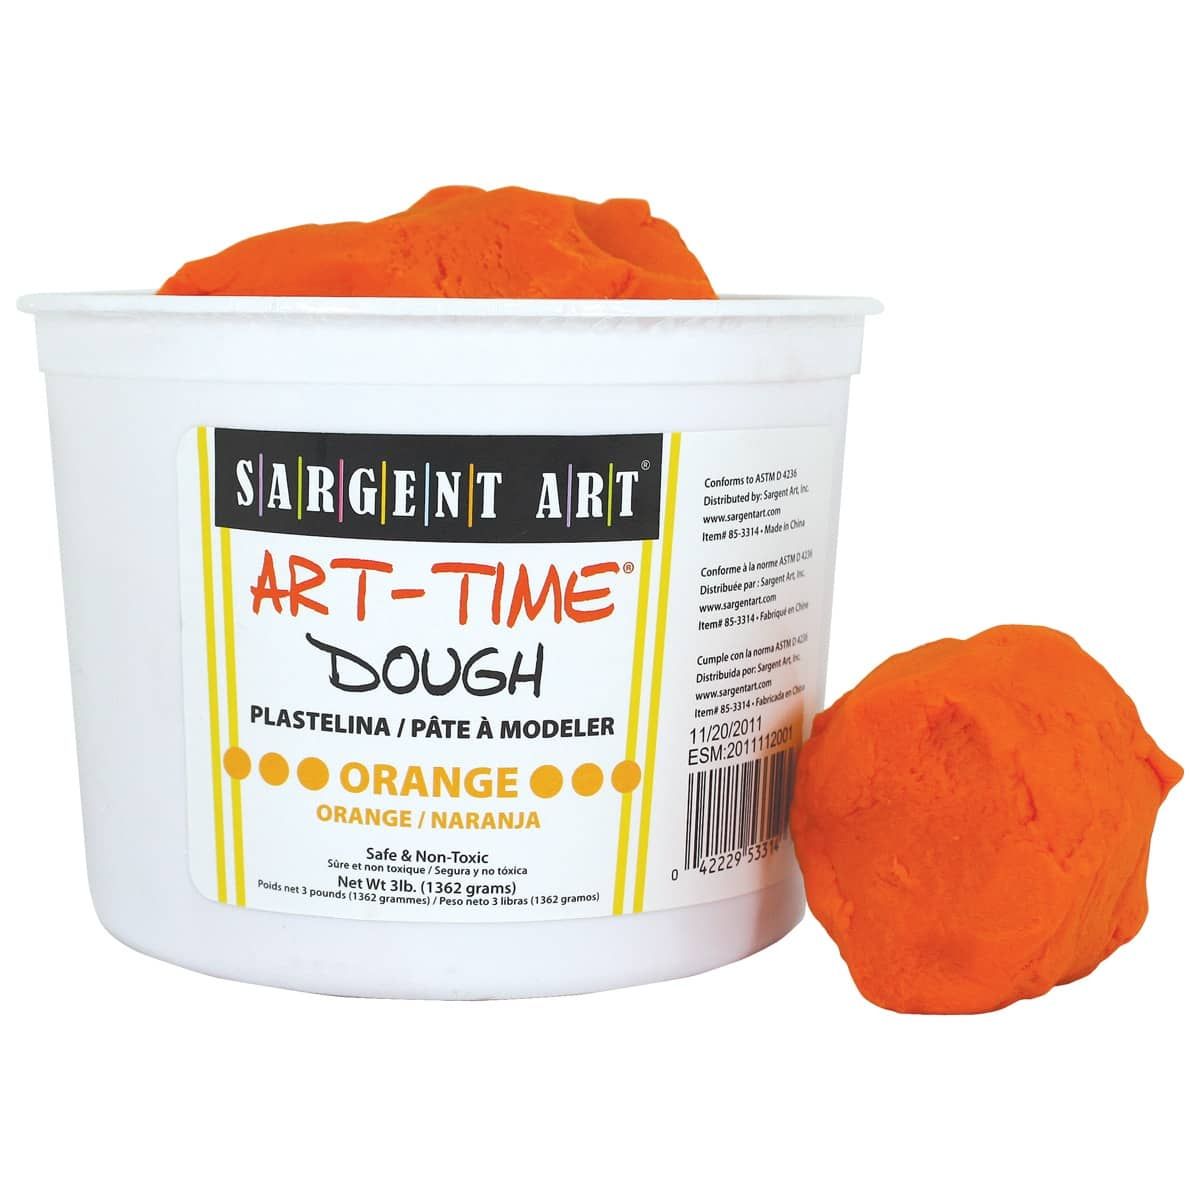 Art-Time Dough - Orange